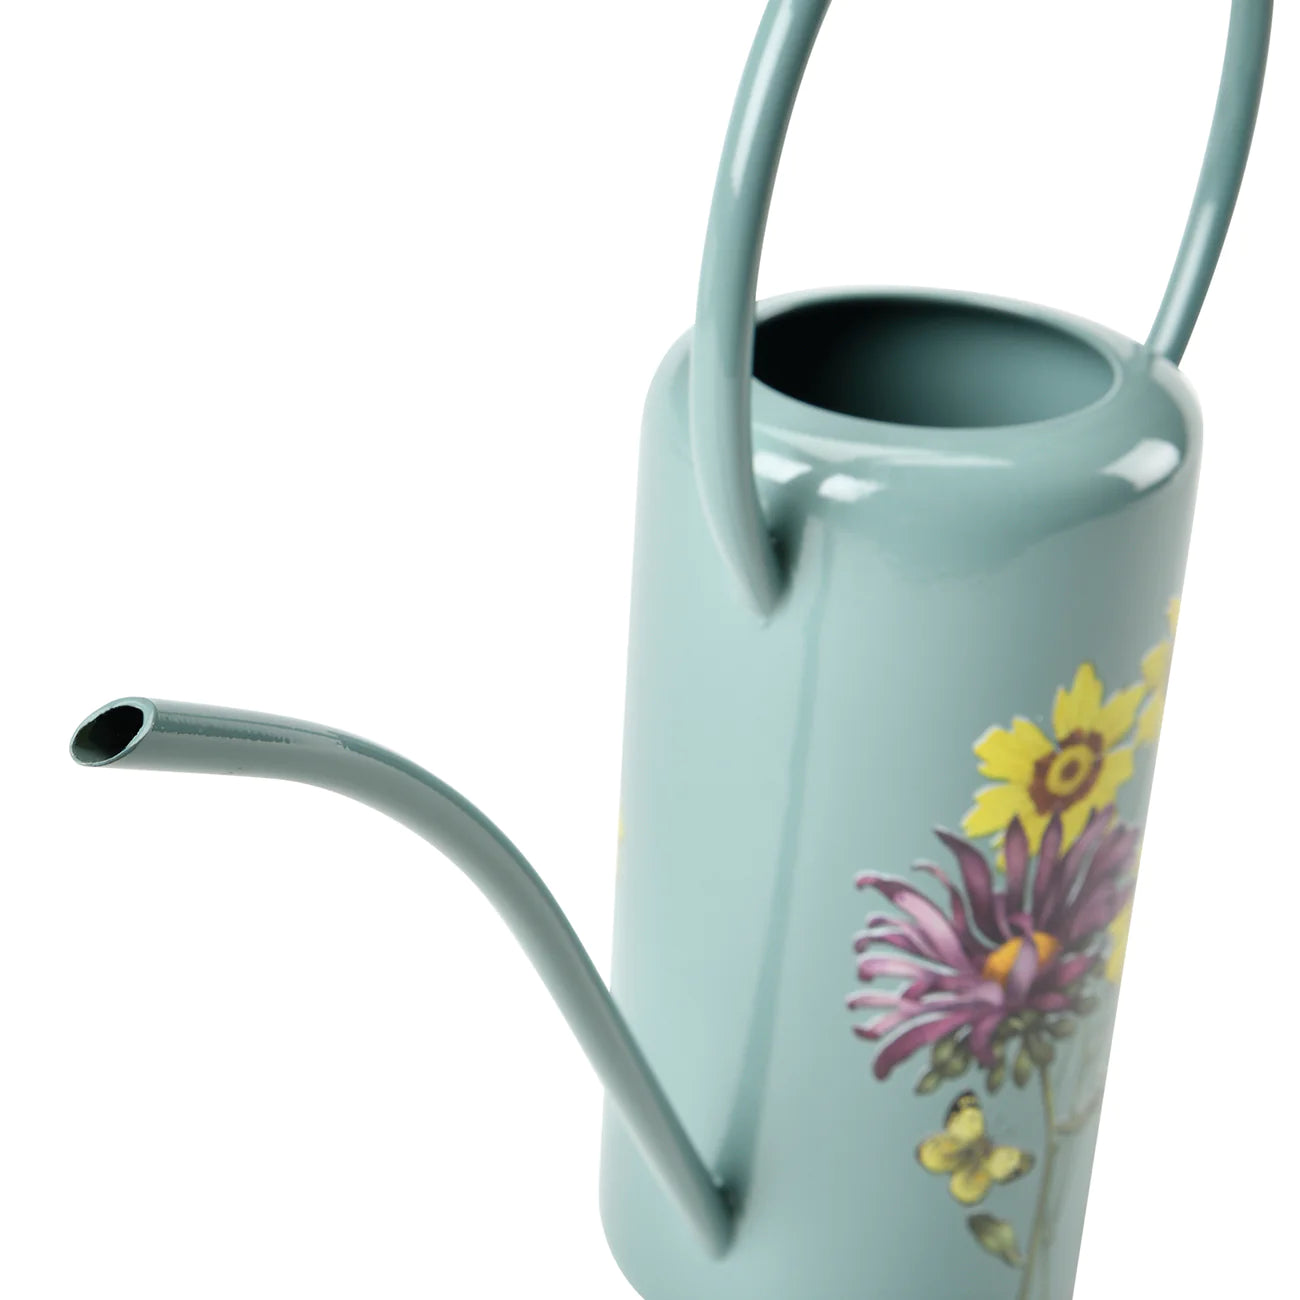 Gifts for Gardeners - Indoor Watering Can